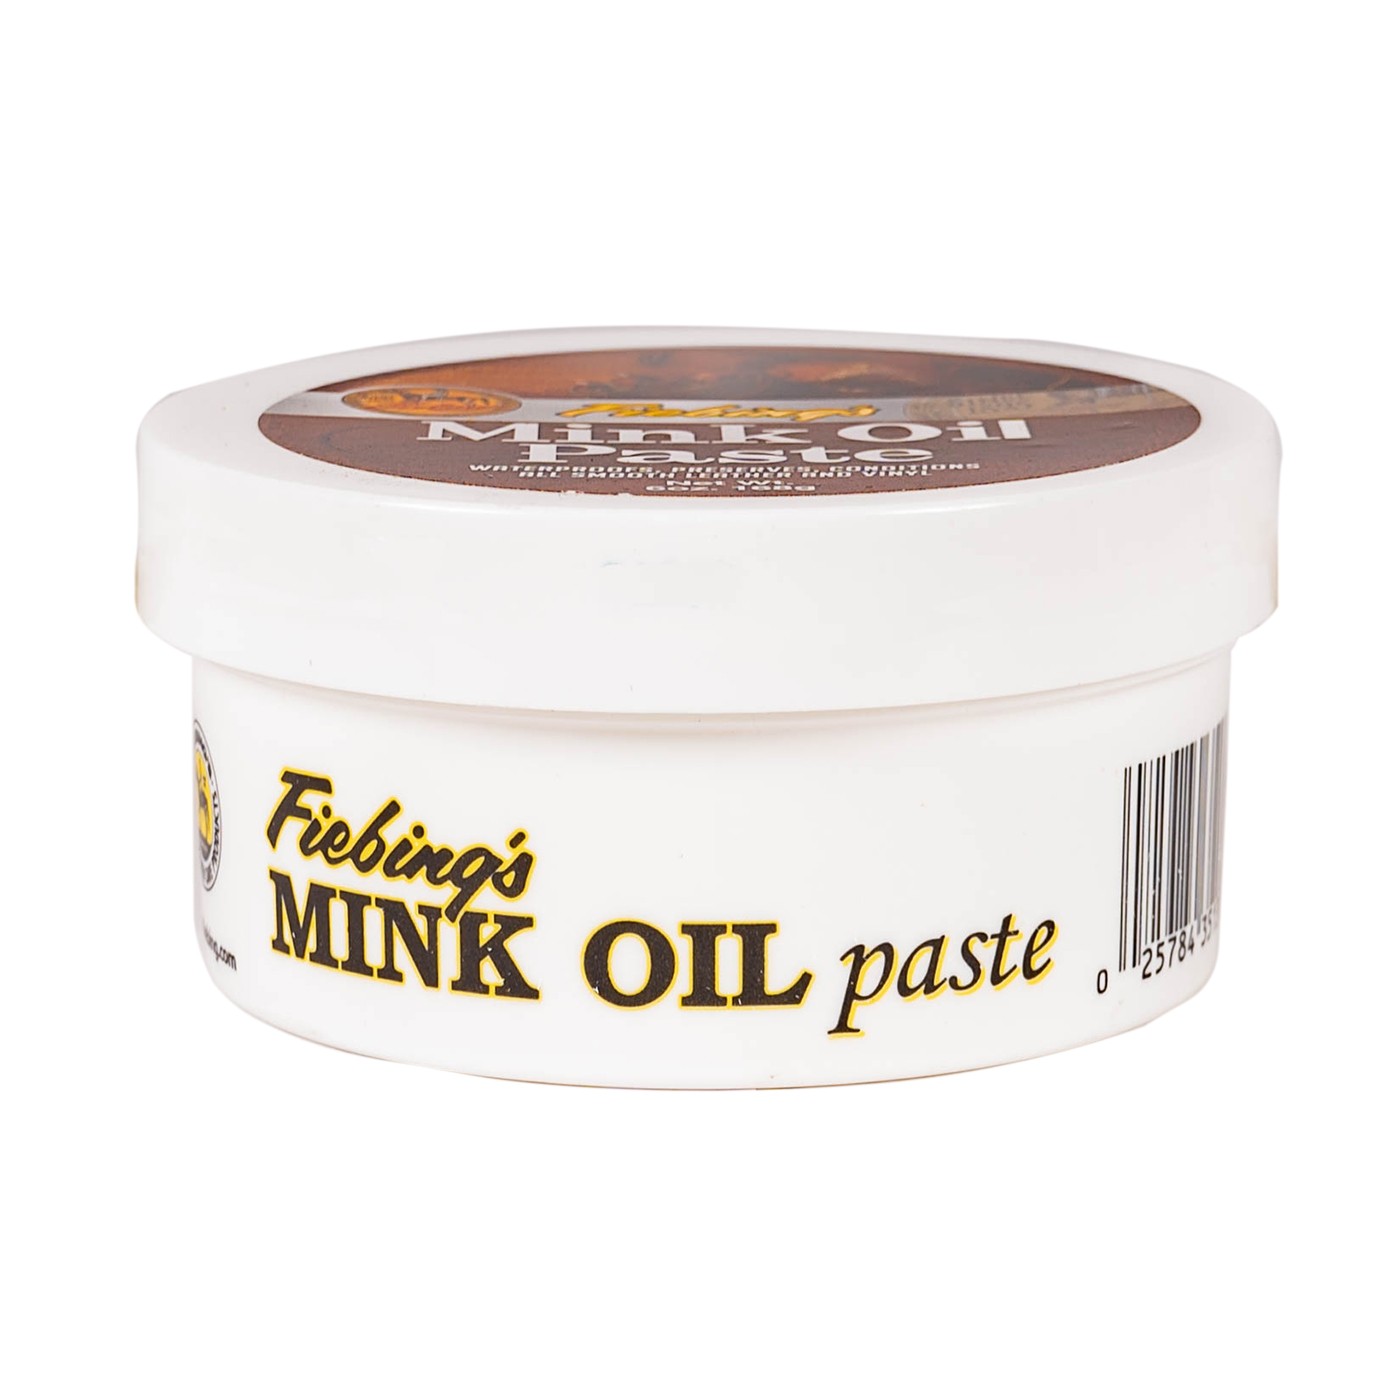 Fiebing's Mink Oil Paste - Glendale, AZ - Apache Junction, AZ - The Stock  Shop Feed & Pet